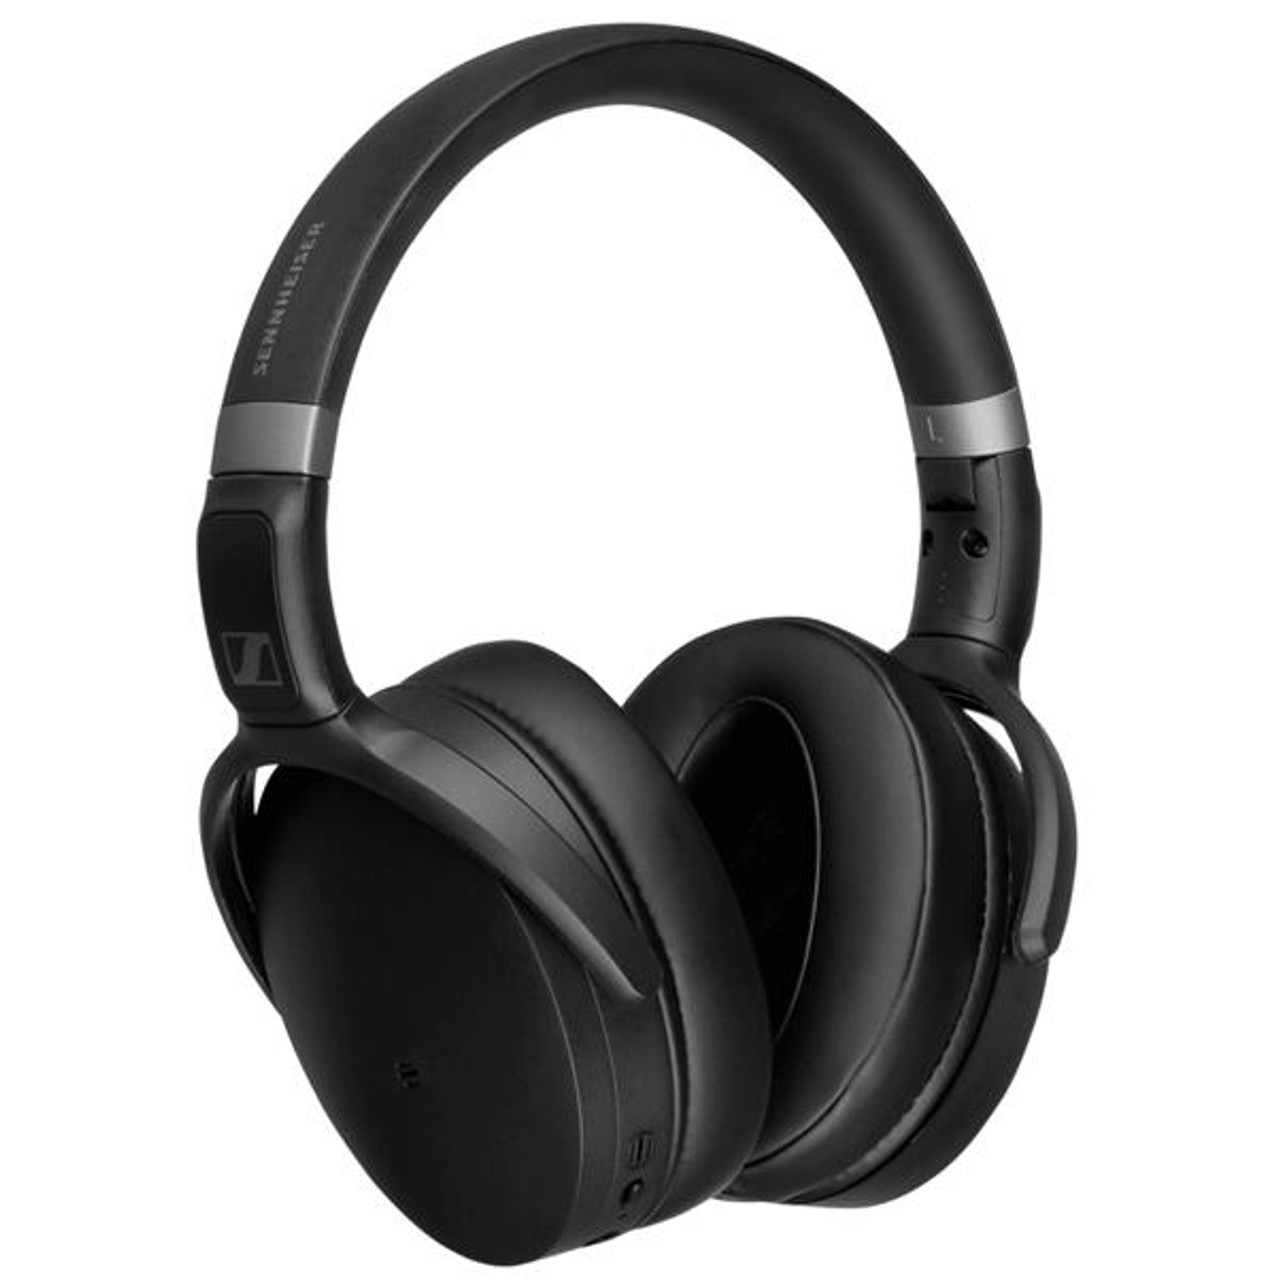 Sennheiser HD 450BT Headphones - Black for sale online